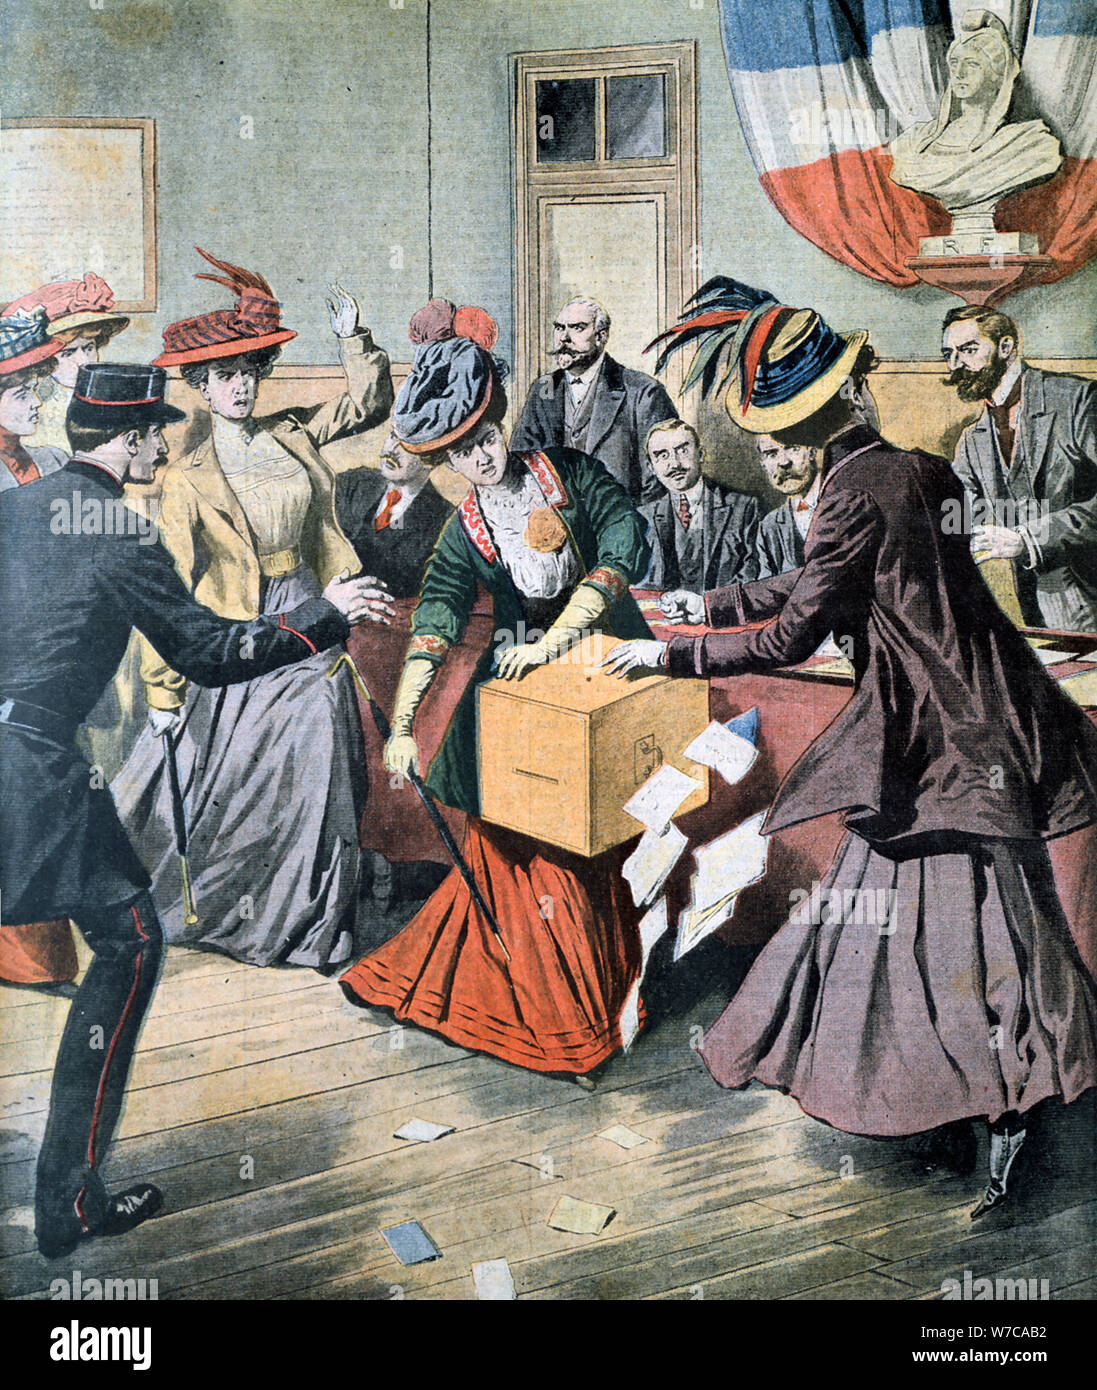 Campaign for Women's Suffrage in Belgium, 1908. Artist: Anon Stock Photo